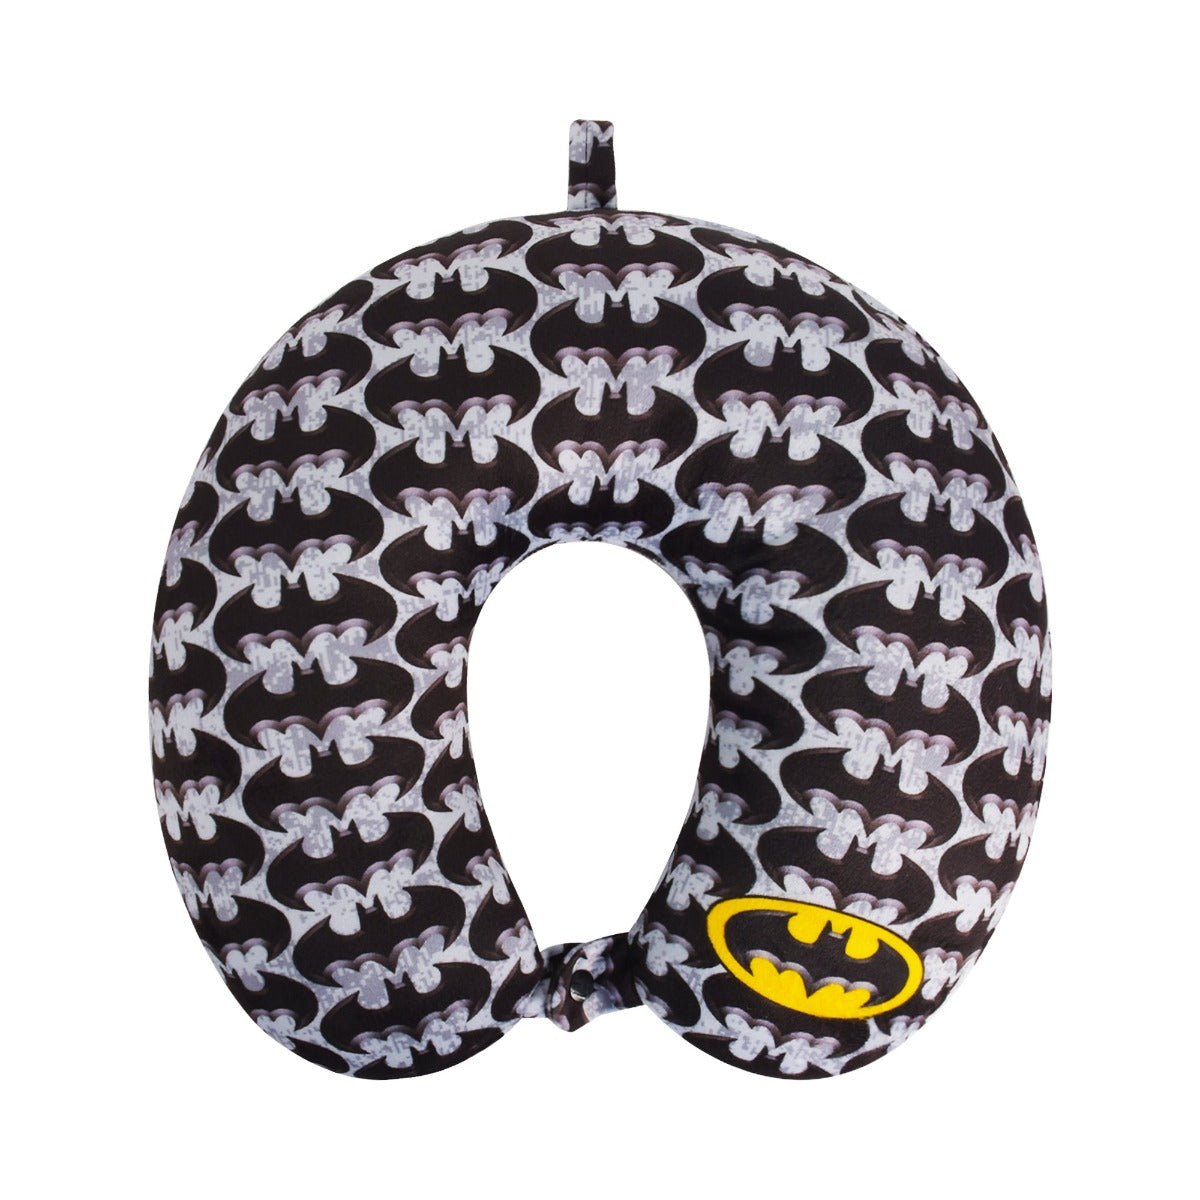 Dc Comics Black Batman Logo Travel Neck Pillow, Grey